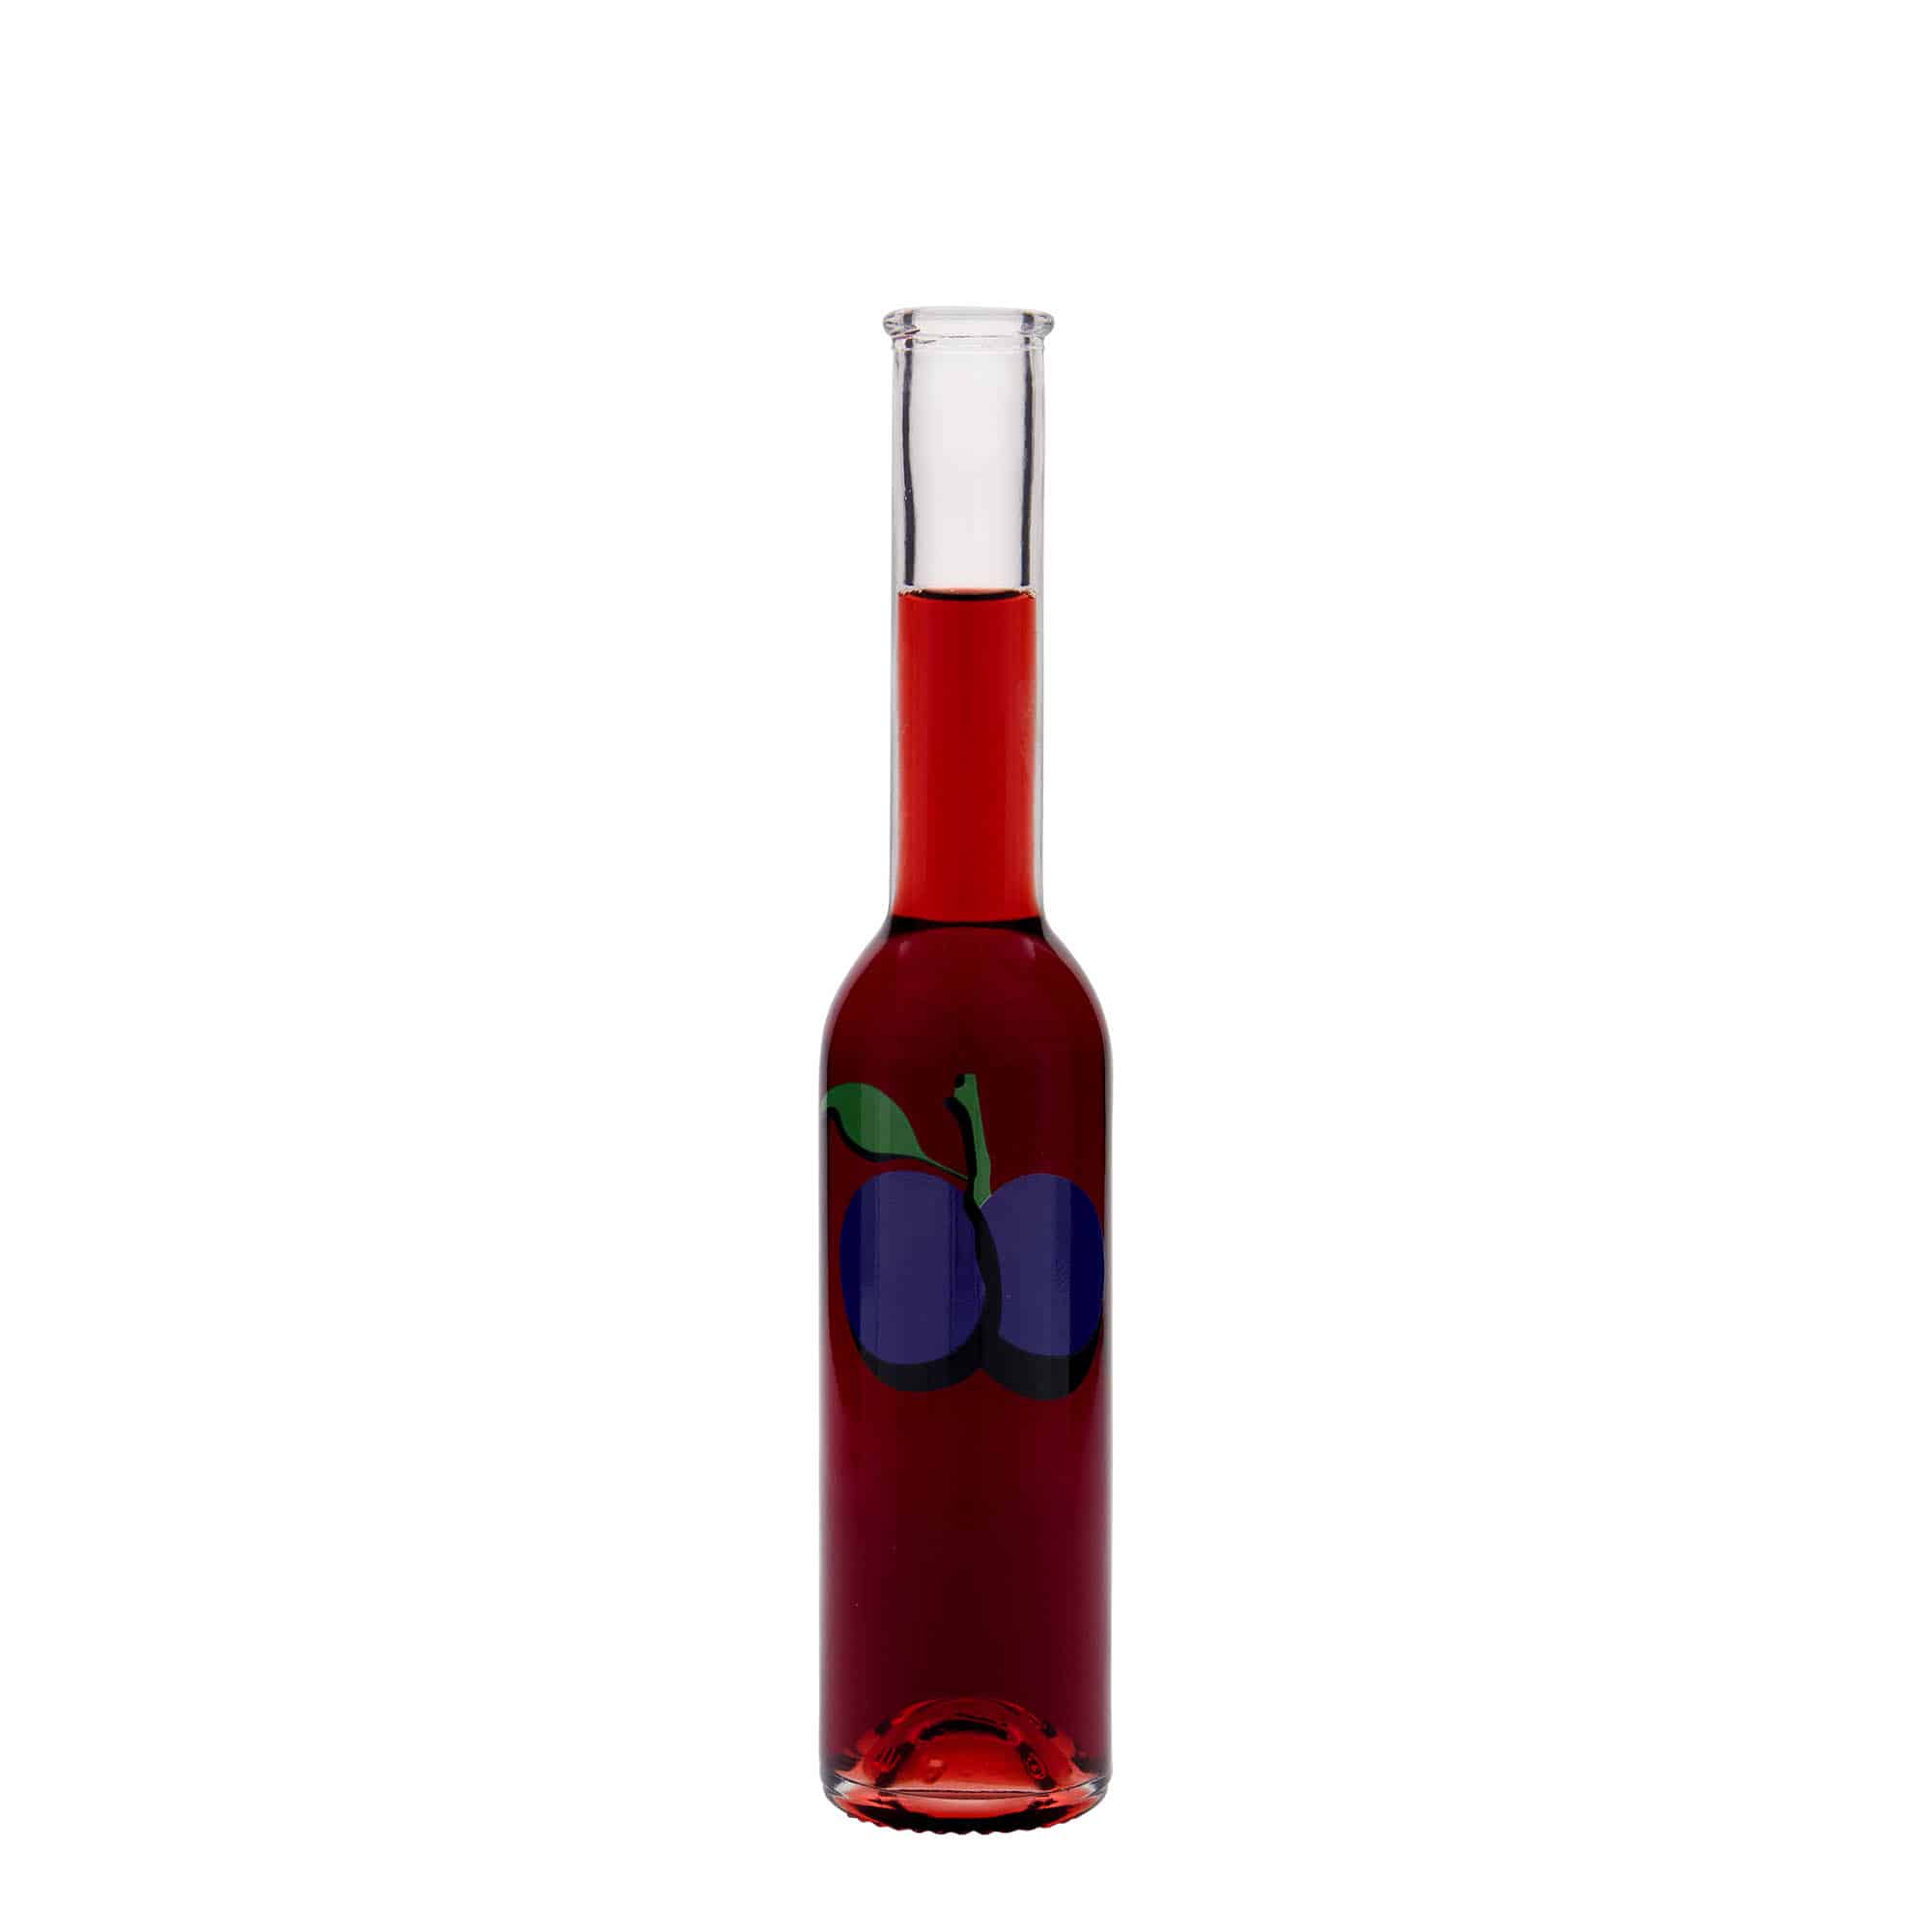 200 ml glass bottle 'Opera', print: plum, closure: cork